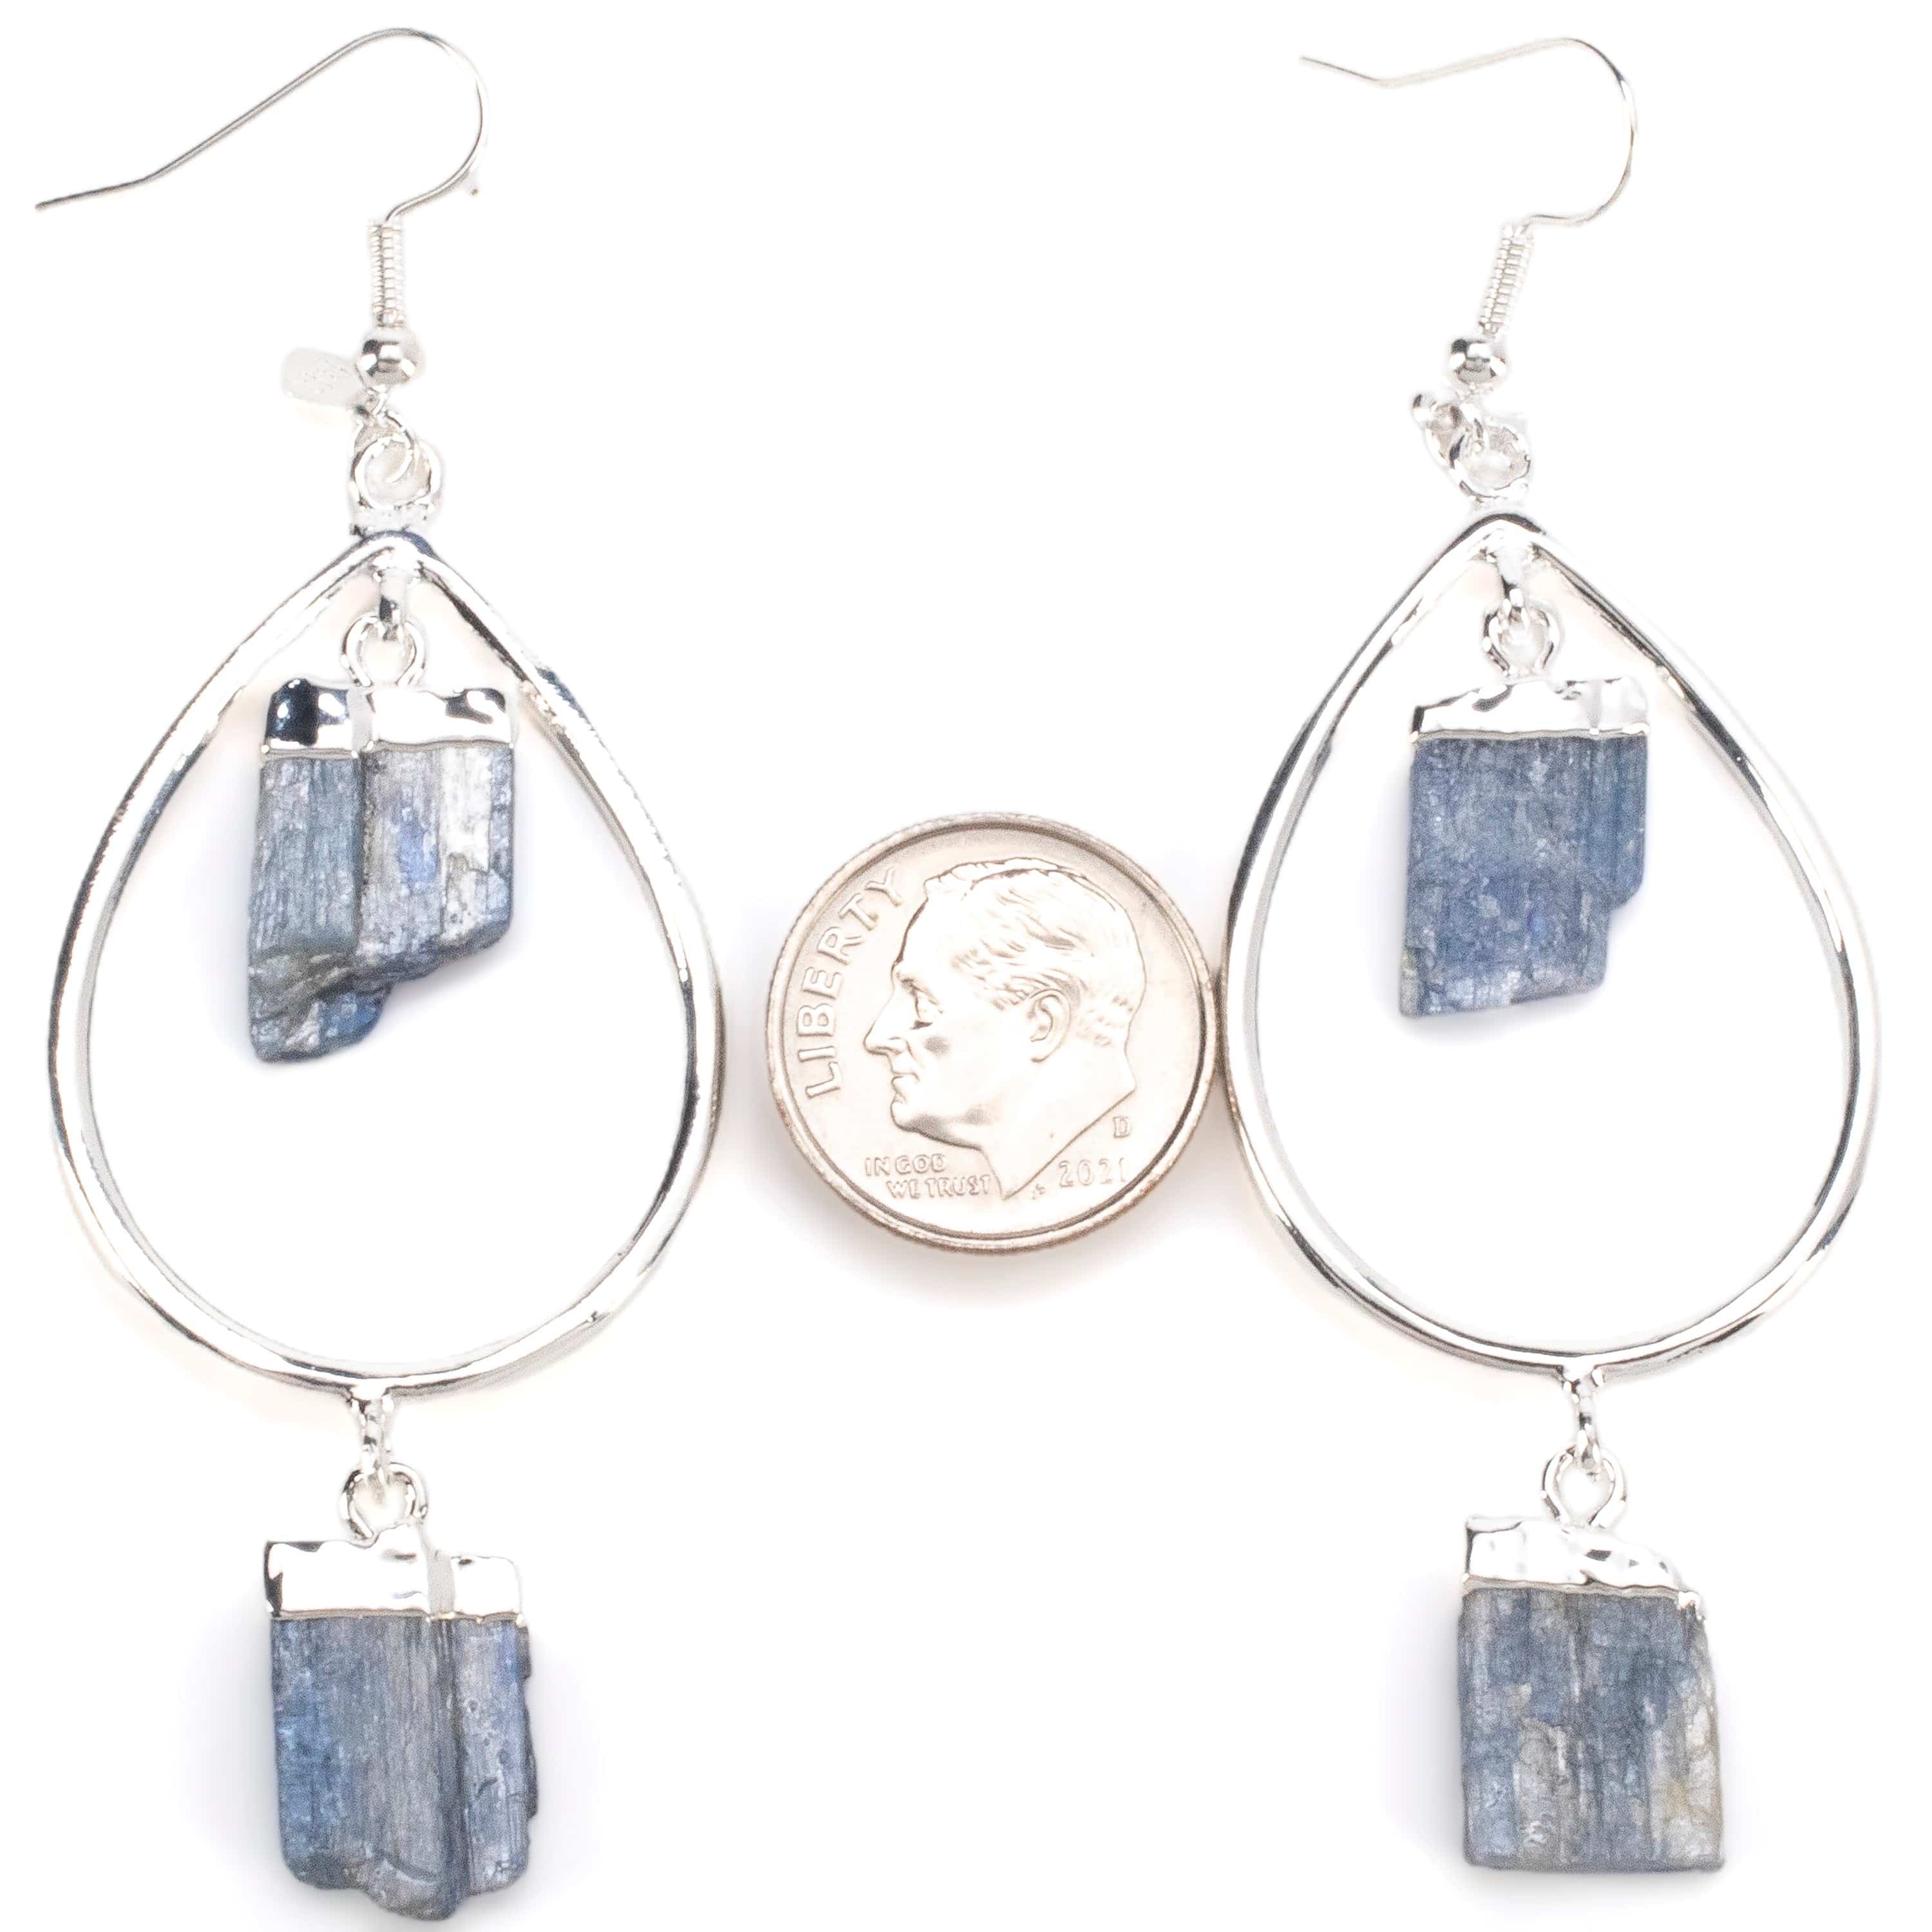 Kalifano Crystal Jewelry Kyanite Crystal Drop Earrings with French Hook CJE-1548-KE